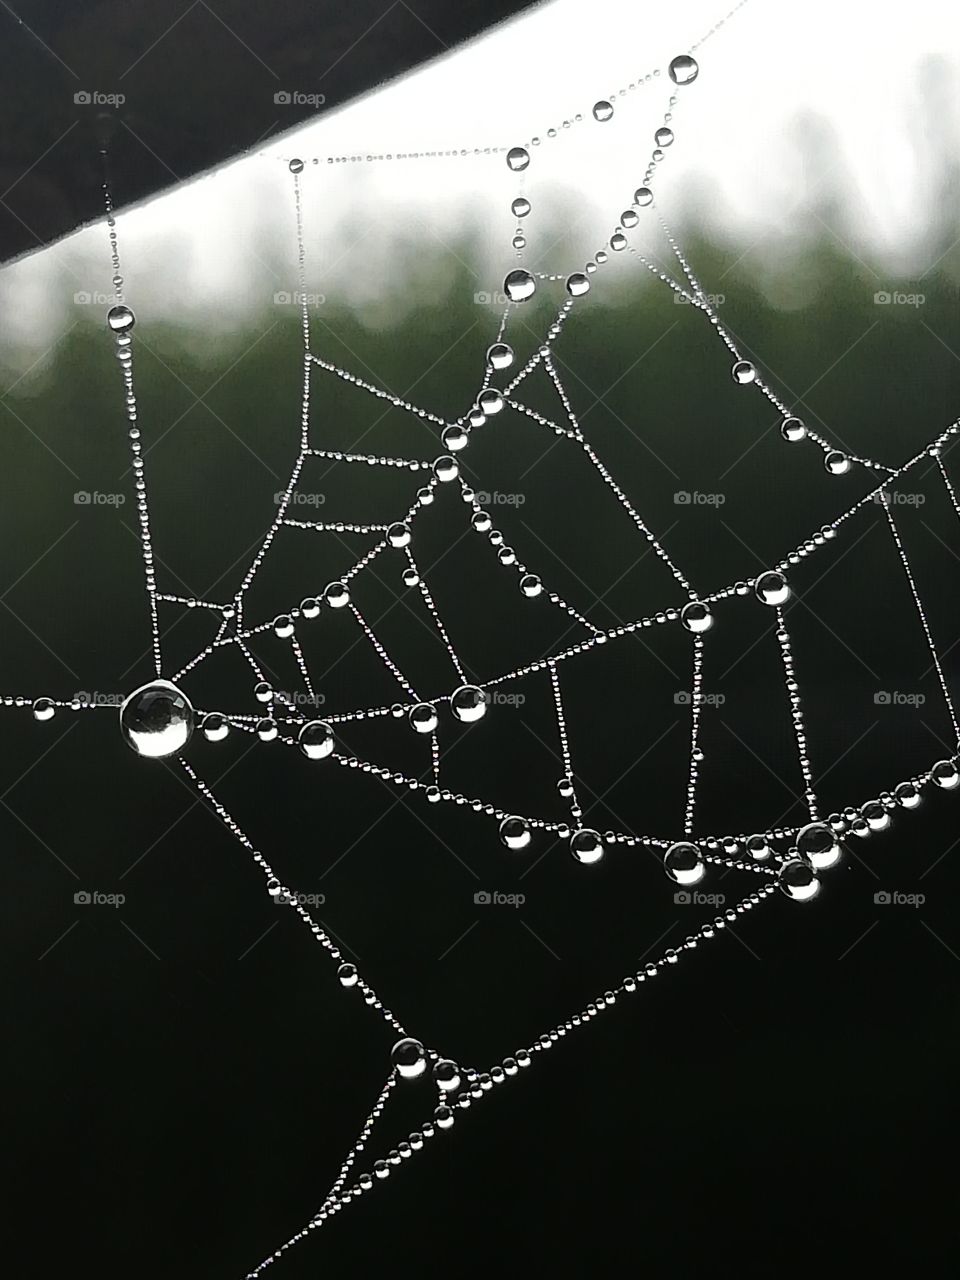 Wintery wet spiders web